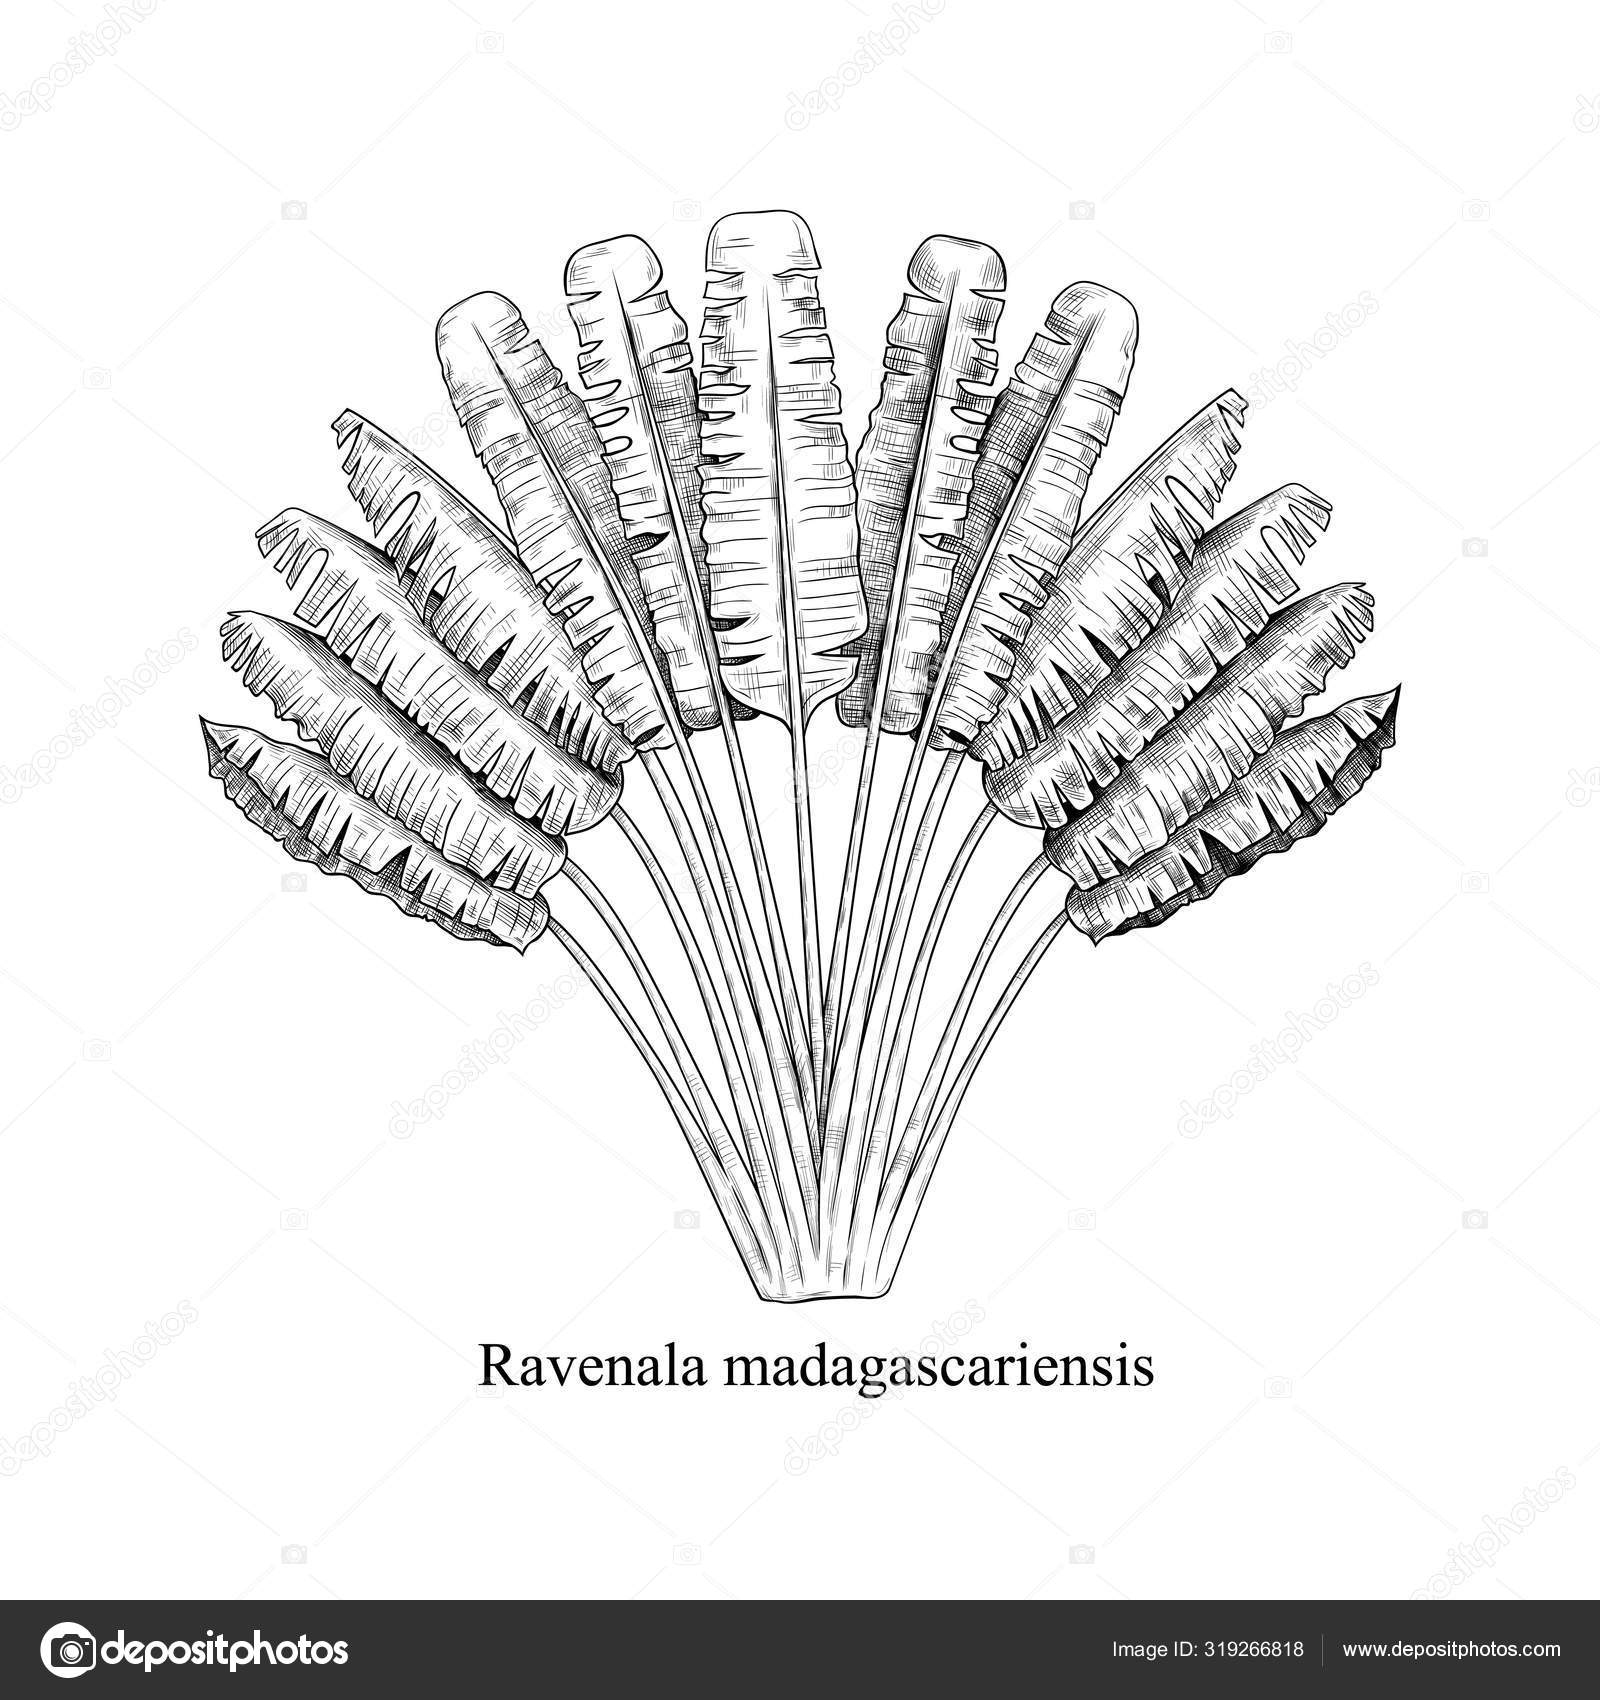 Raizes & Folhas - A Ravenala (Ravenala madagascariensis) é